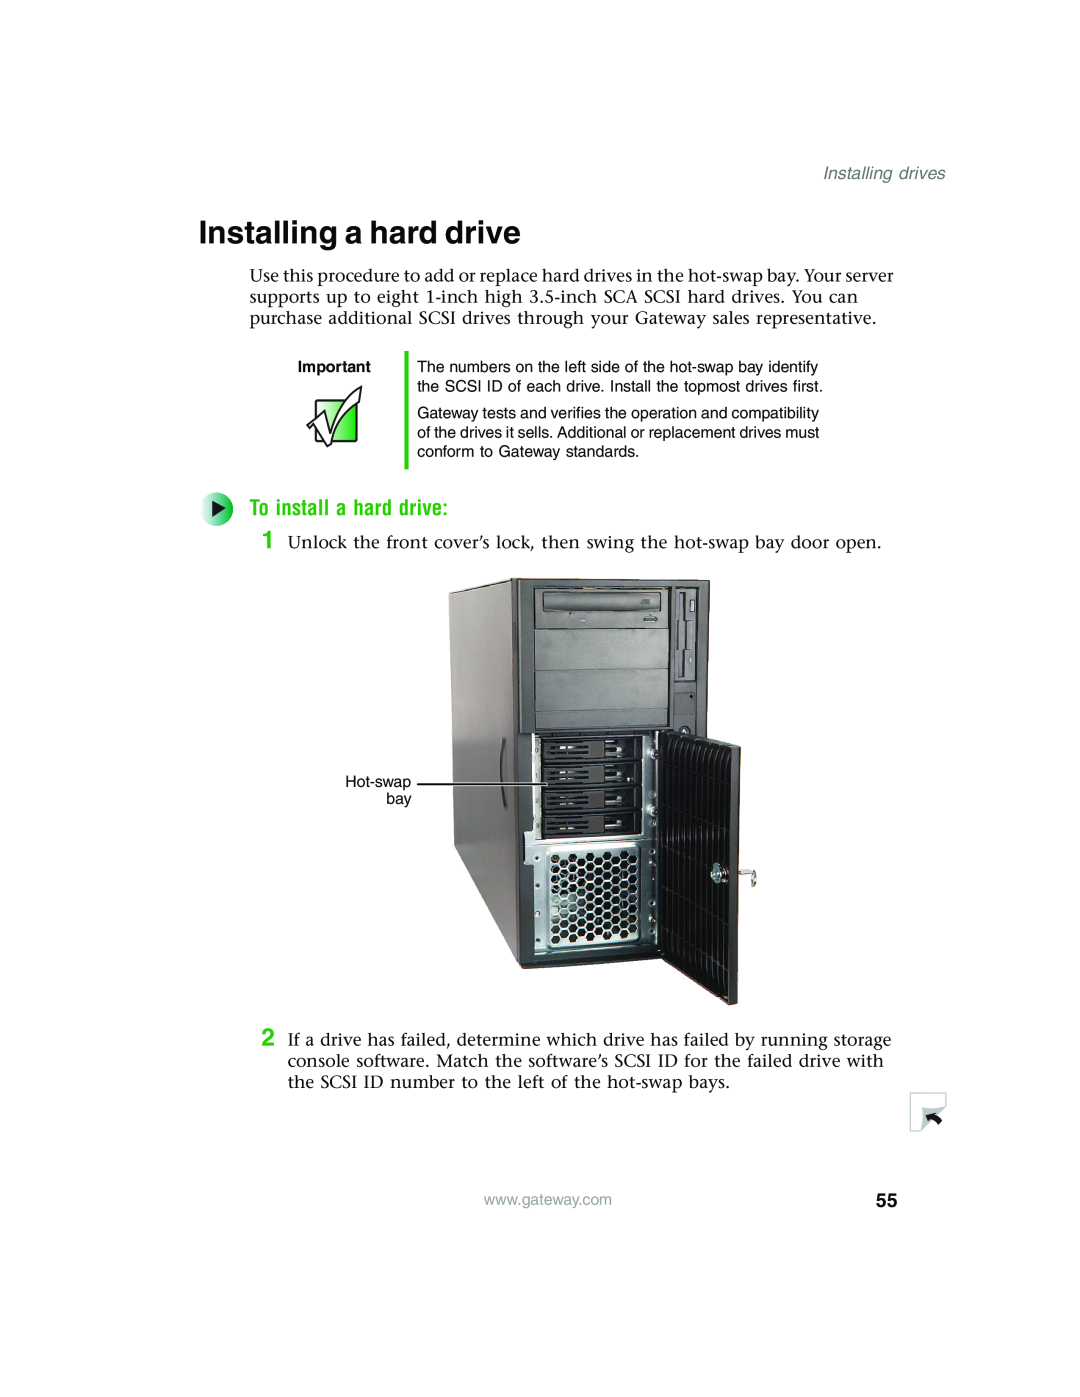 Gateway 960 manual Installing a hard drive, To install a hard drive, Installing drives 